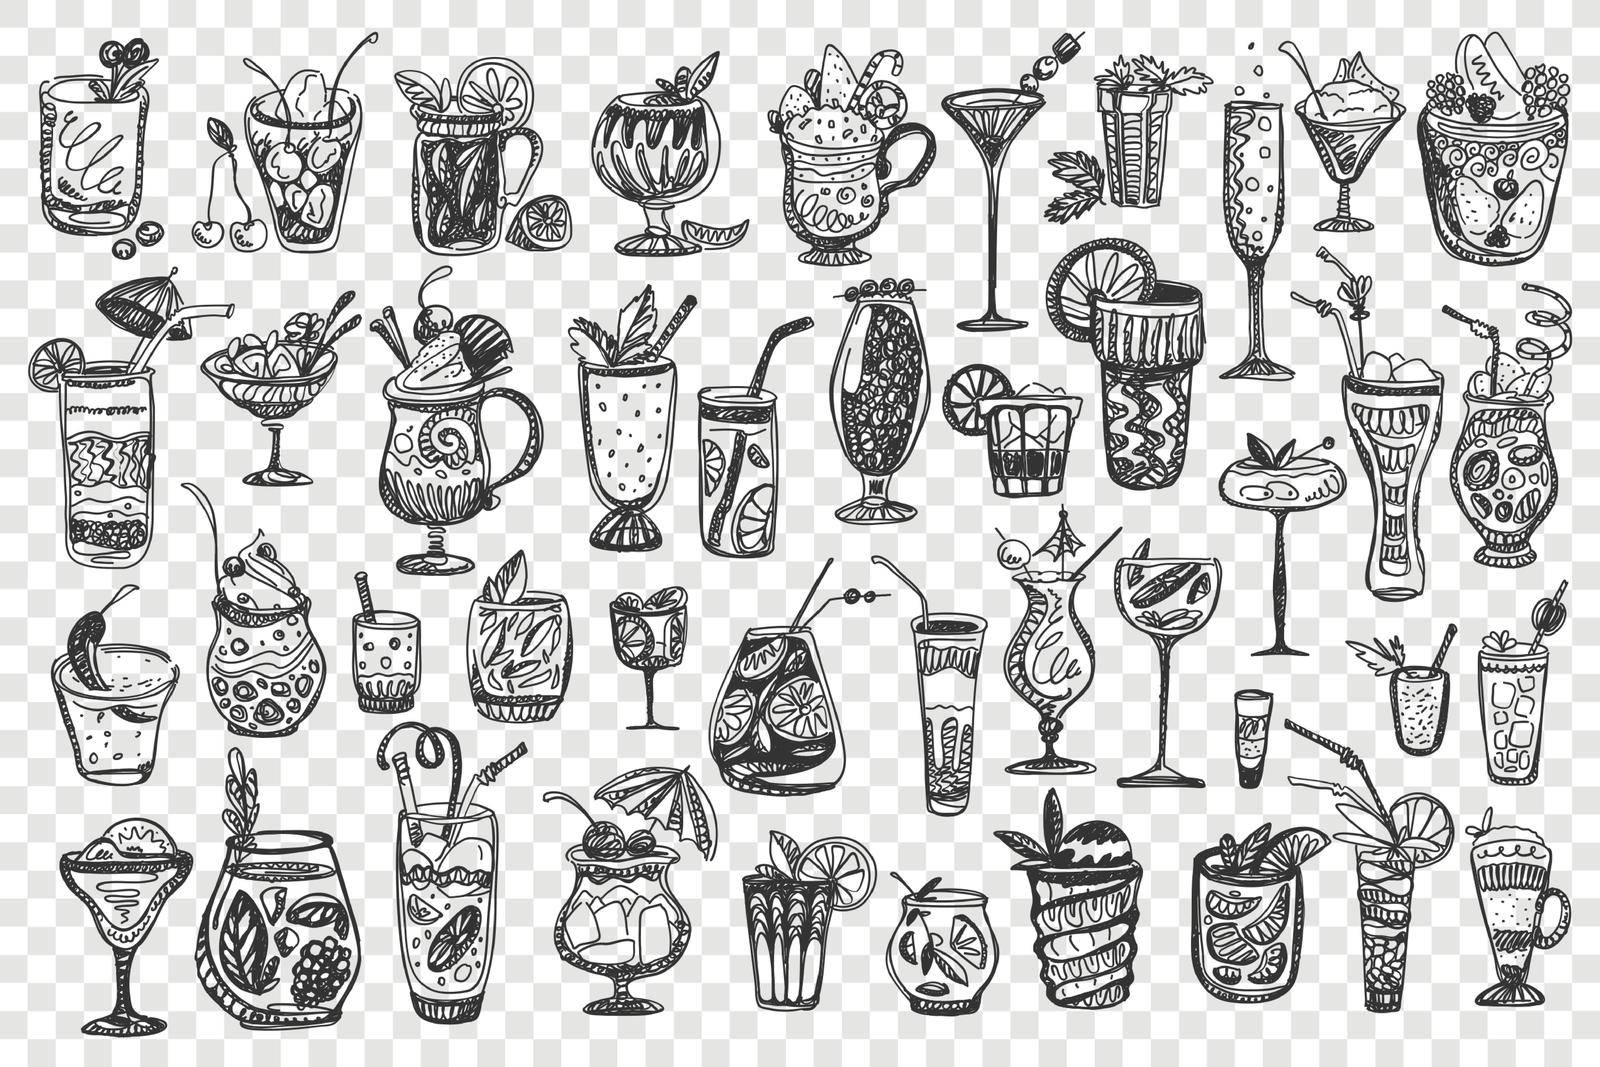 Cocktails hand drawn doodle set by Vasilyeva